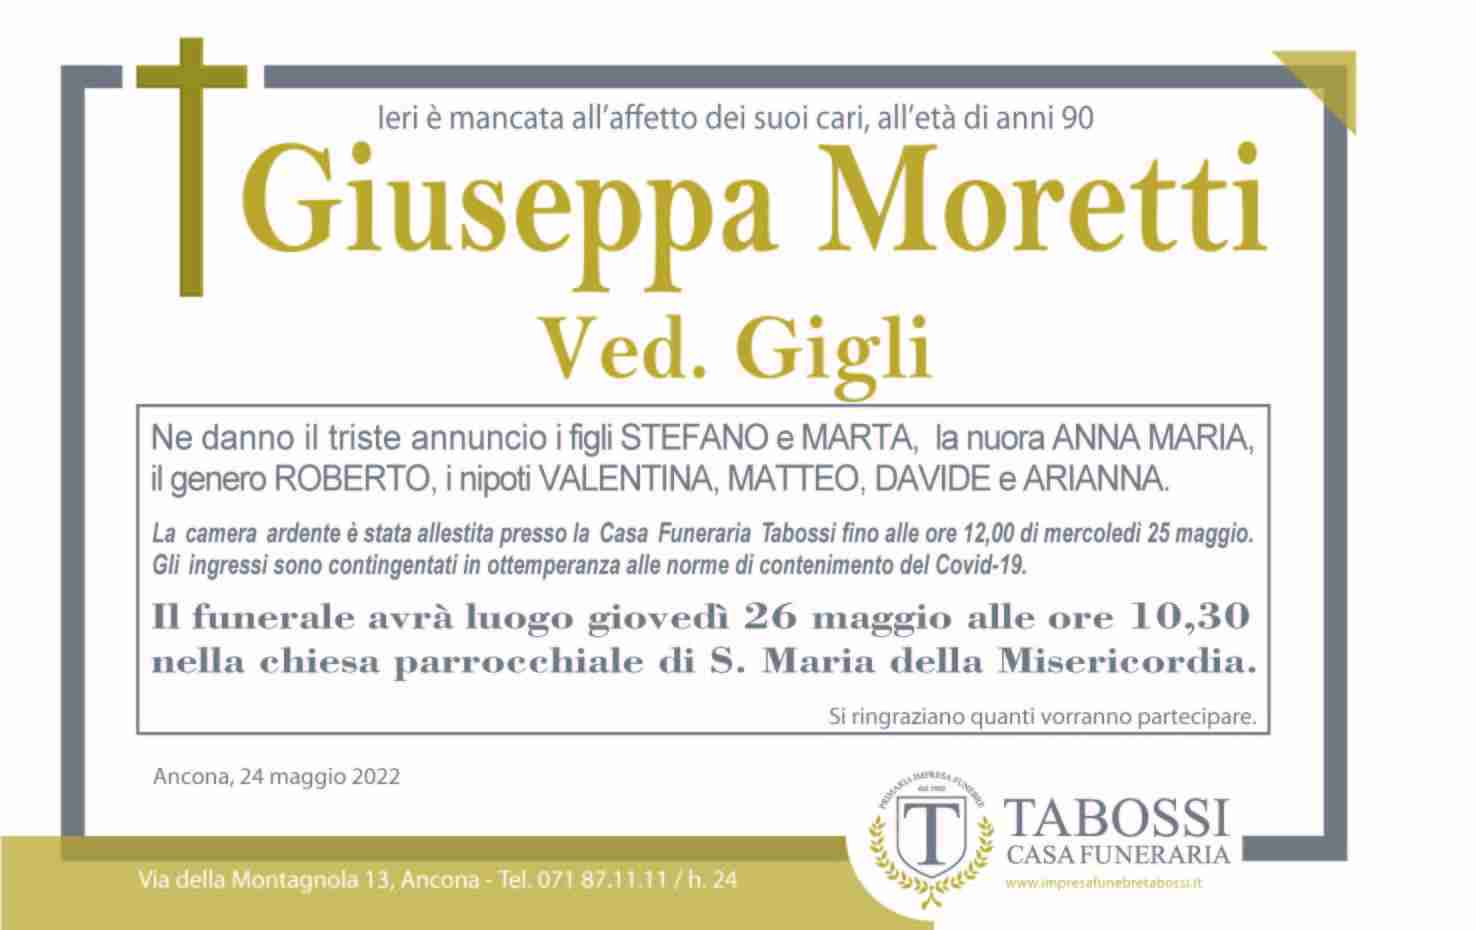 Giuseppa Moretti